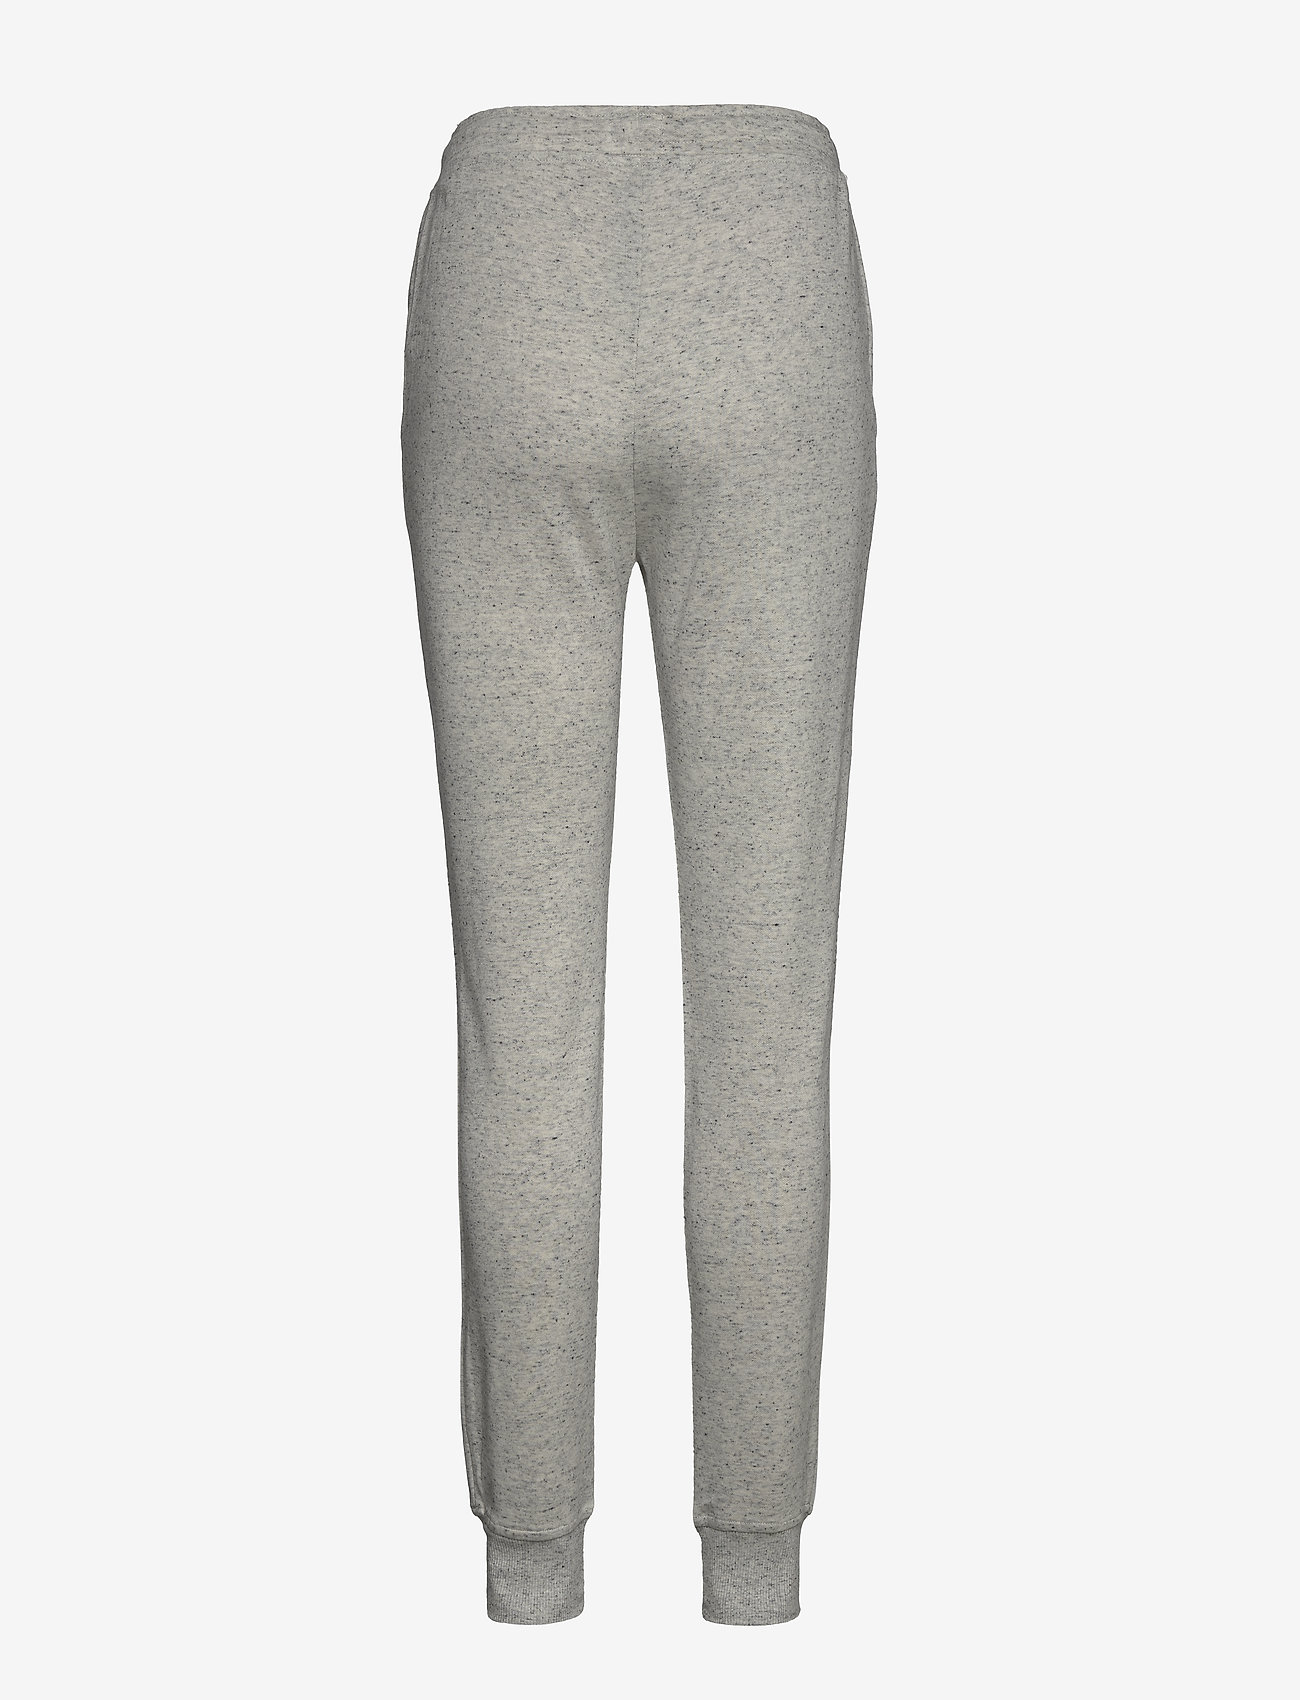 JBS of Denmark - JBS of DK sweatpants bamb - light gray - 1